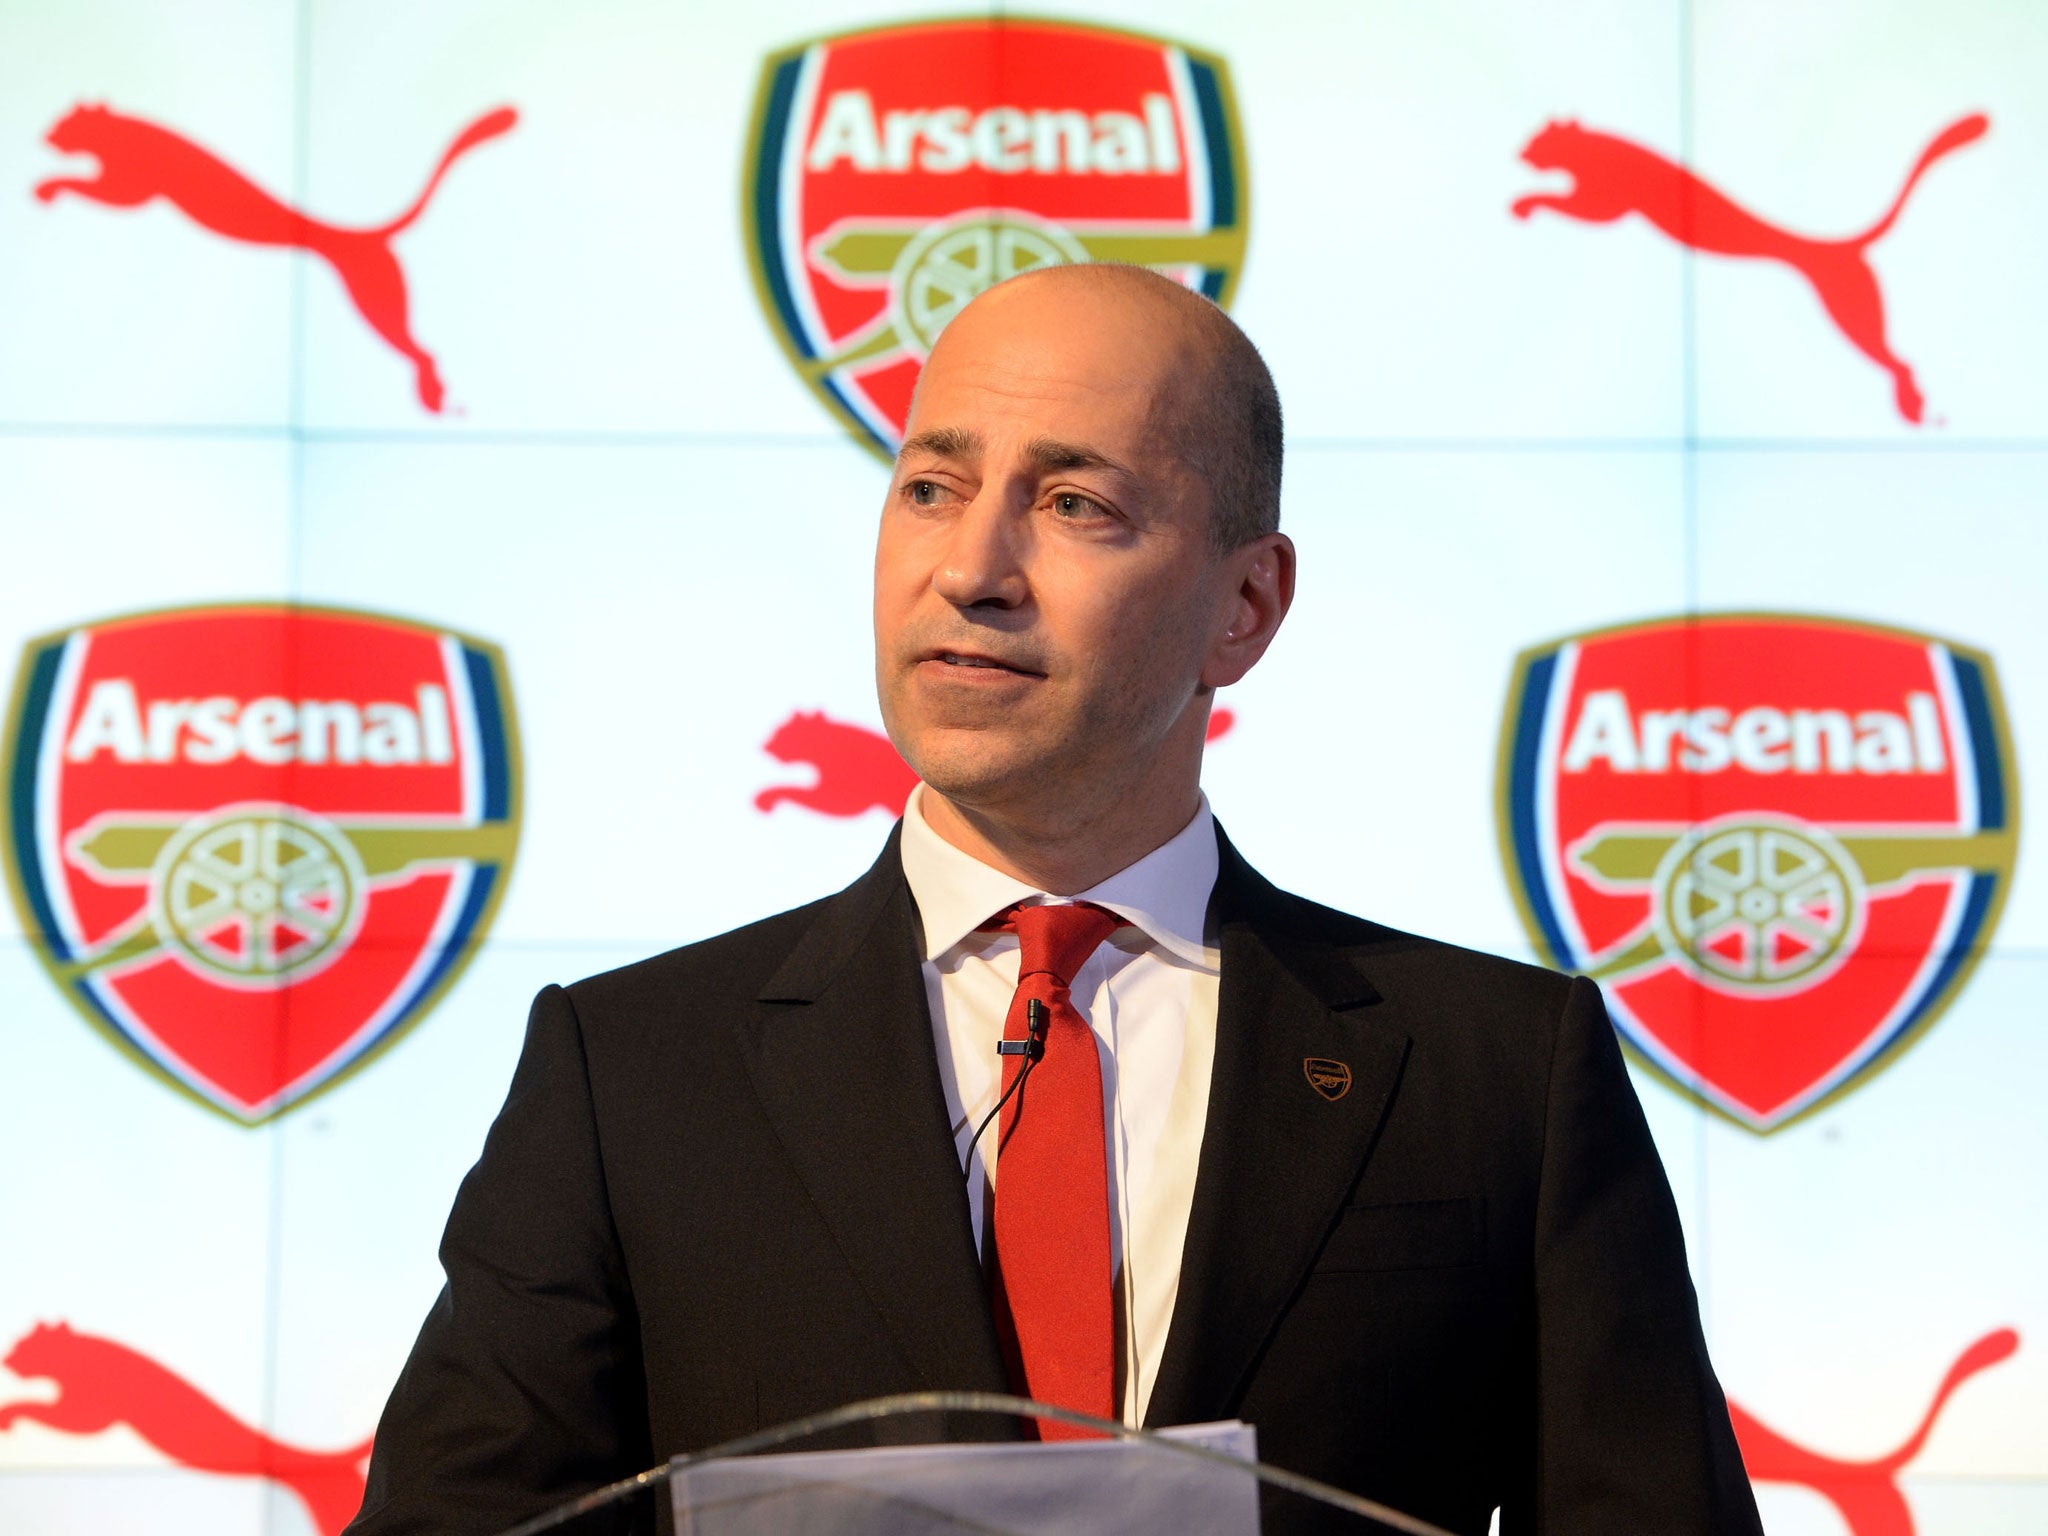 Arsenal's chief executive Ivan Gazidis at the launch of Puma's £150m kit deal